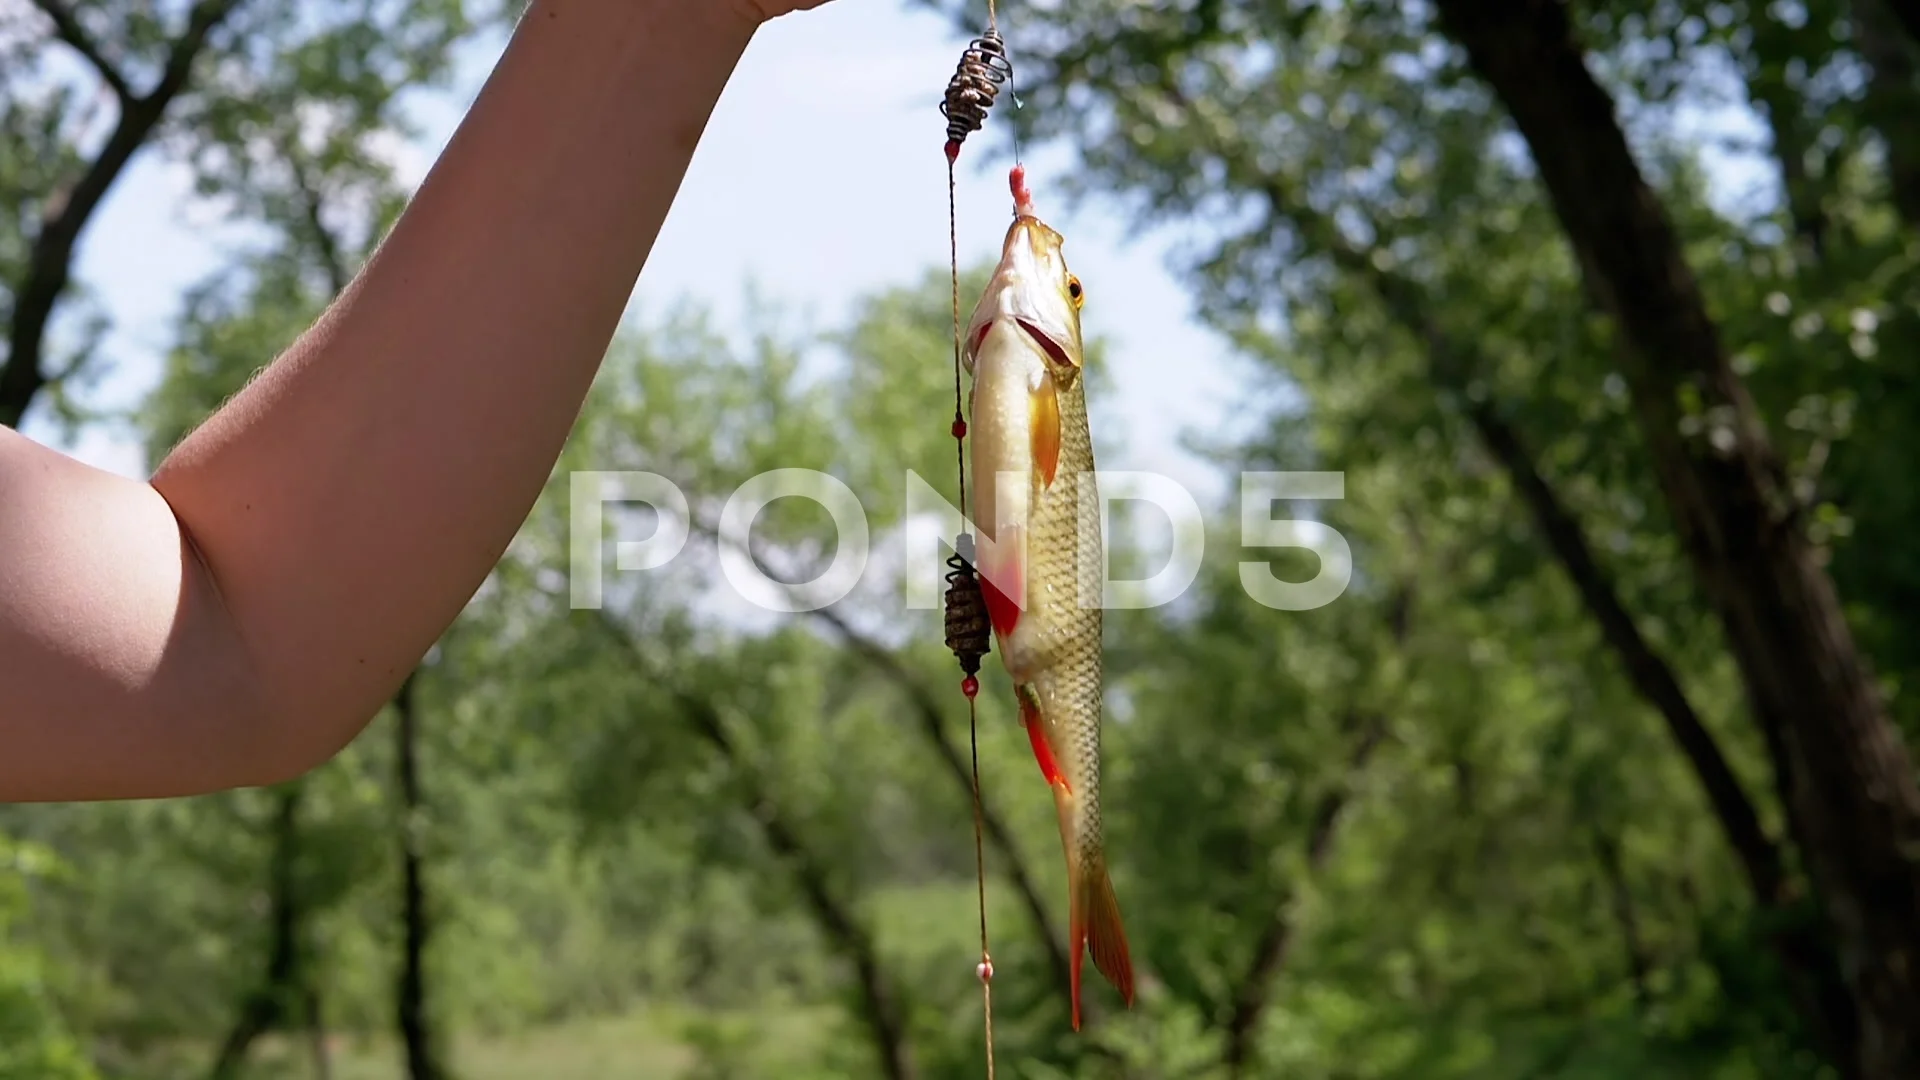 https://images.pond5.com/close-caught-freshwater-big-fish-footage-246147493_prevstill.jpeg